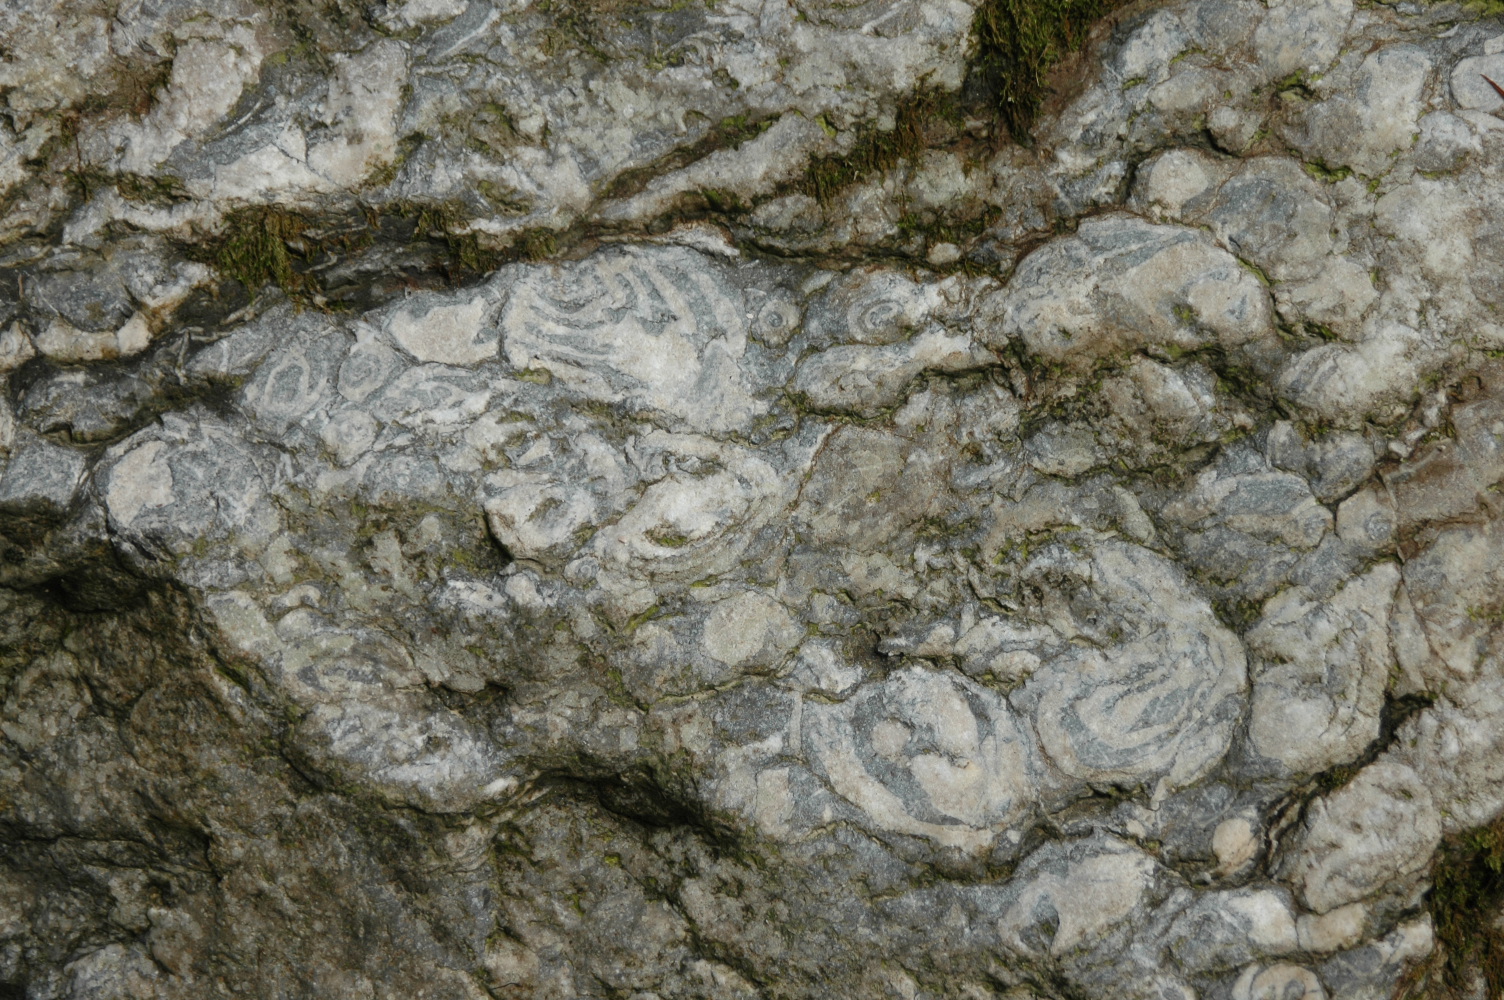 Fossils embedded in rock at Styrian Eisenwurzen UNESCO Geopark